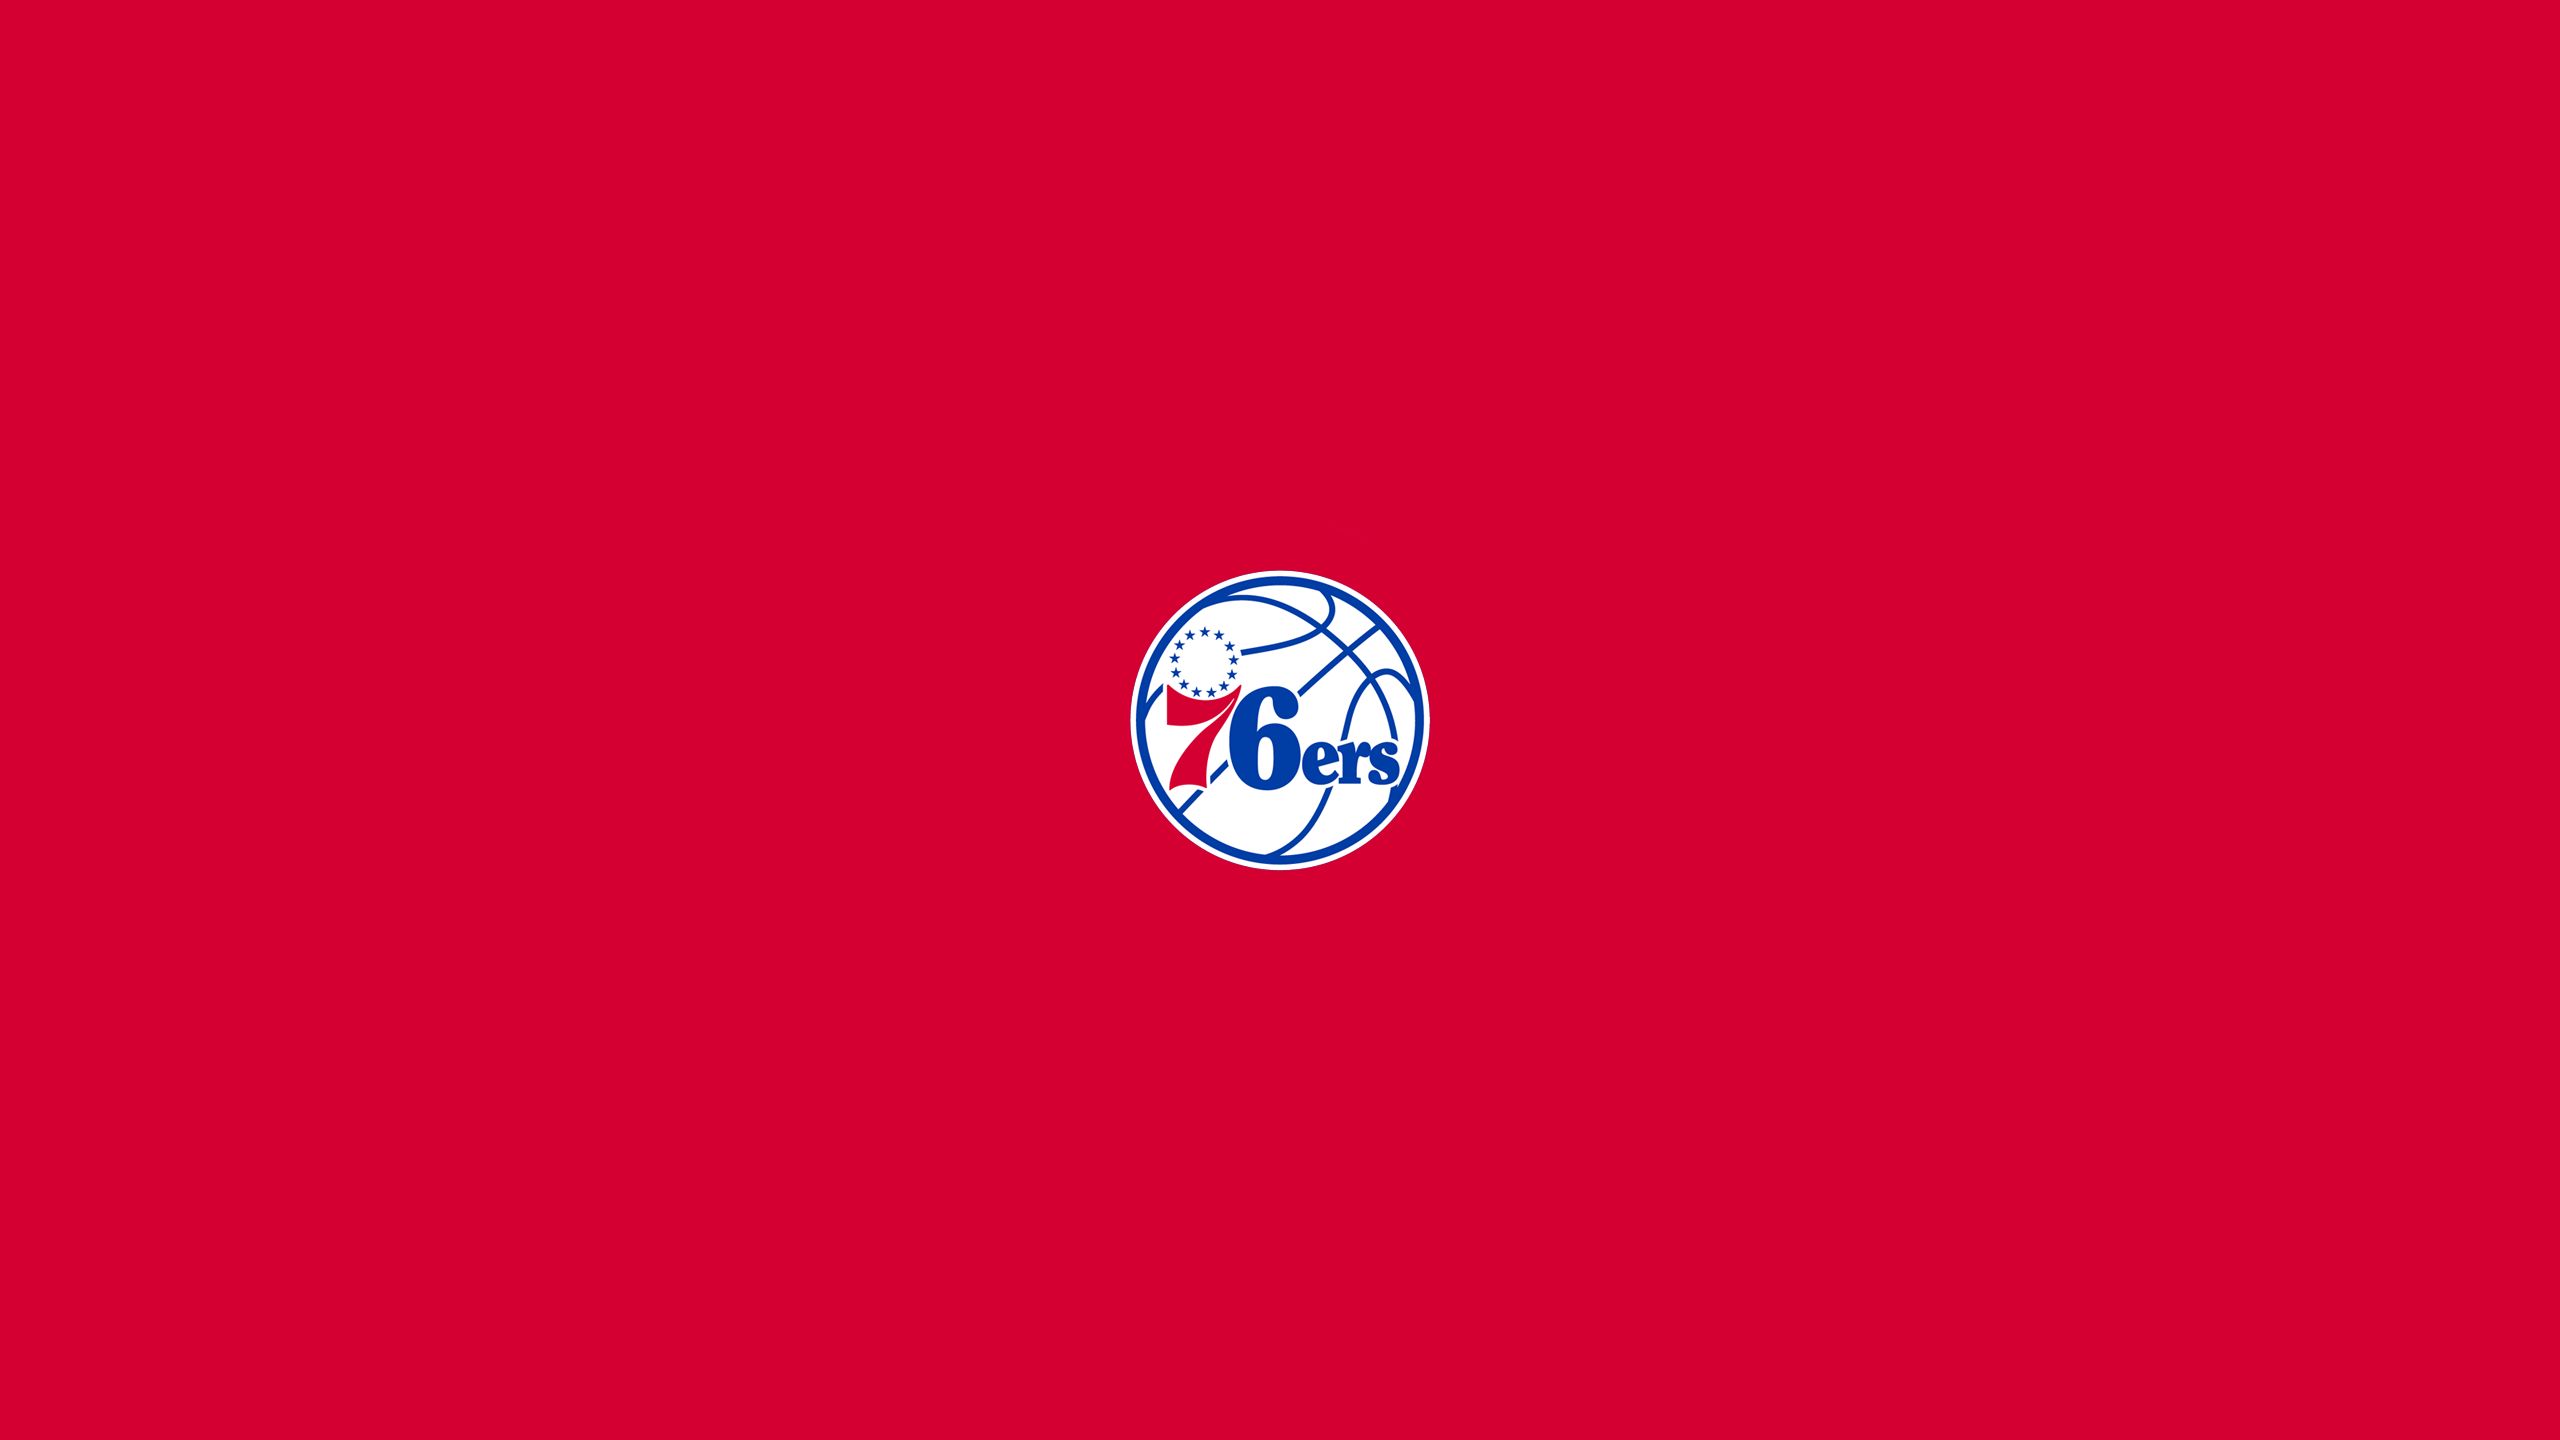 Descarga gratuita de fondo de pantalla para móvil de Baloncesto, Logo, Emblema, Nba, Deporte, Filadelfia 76Ers.